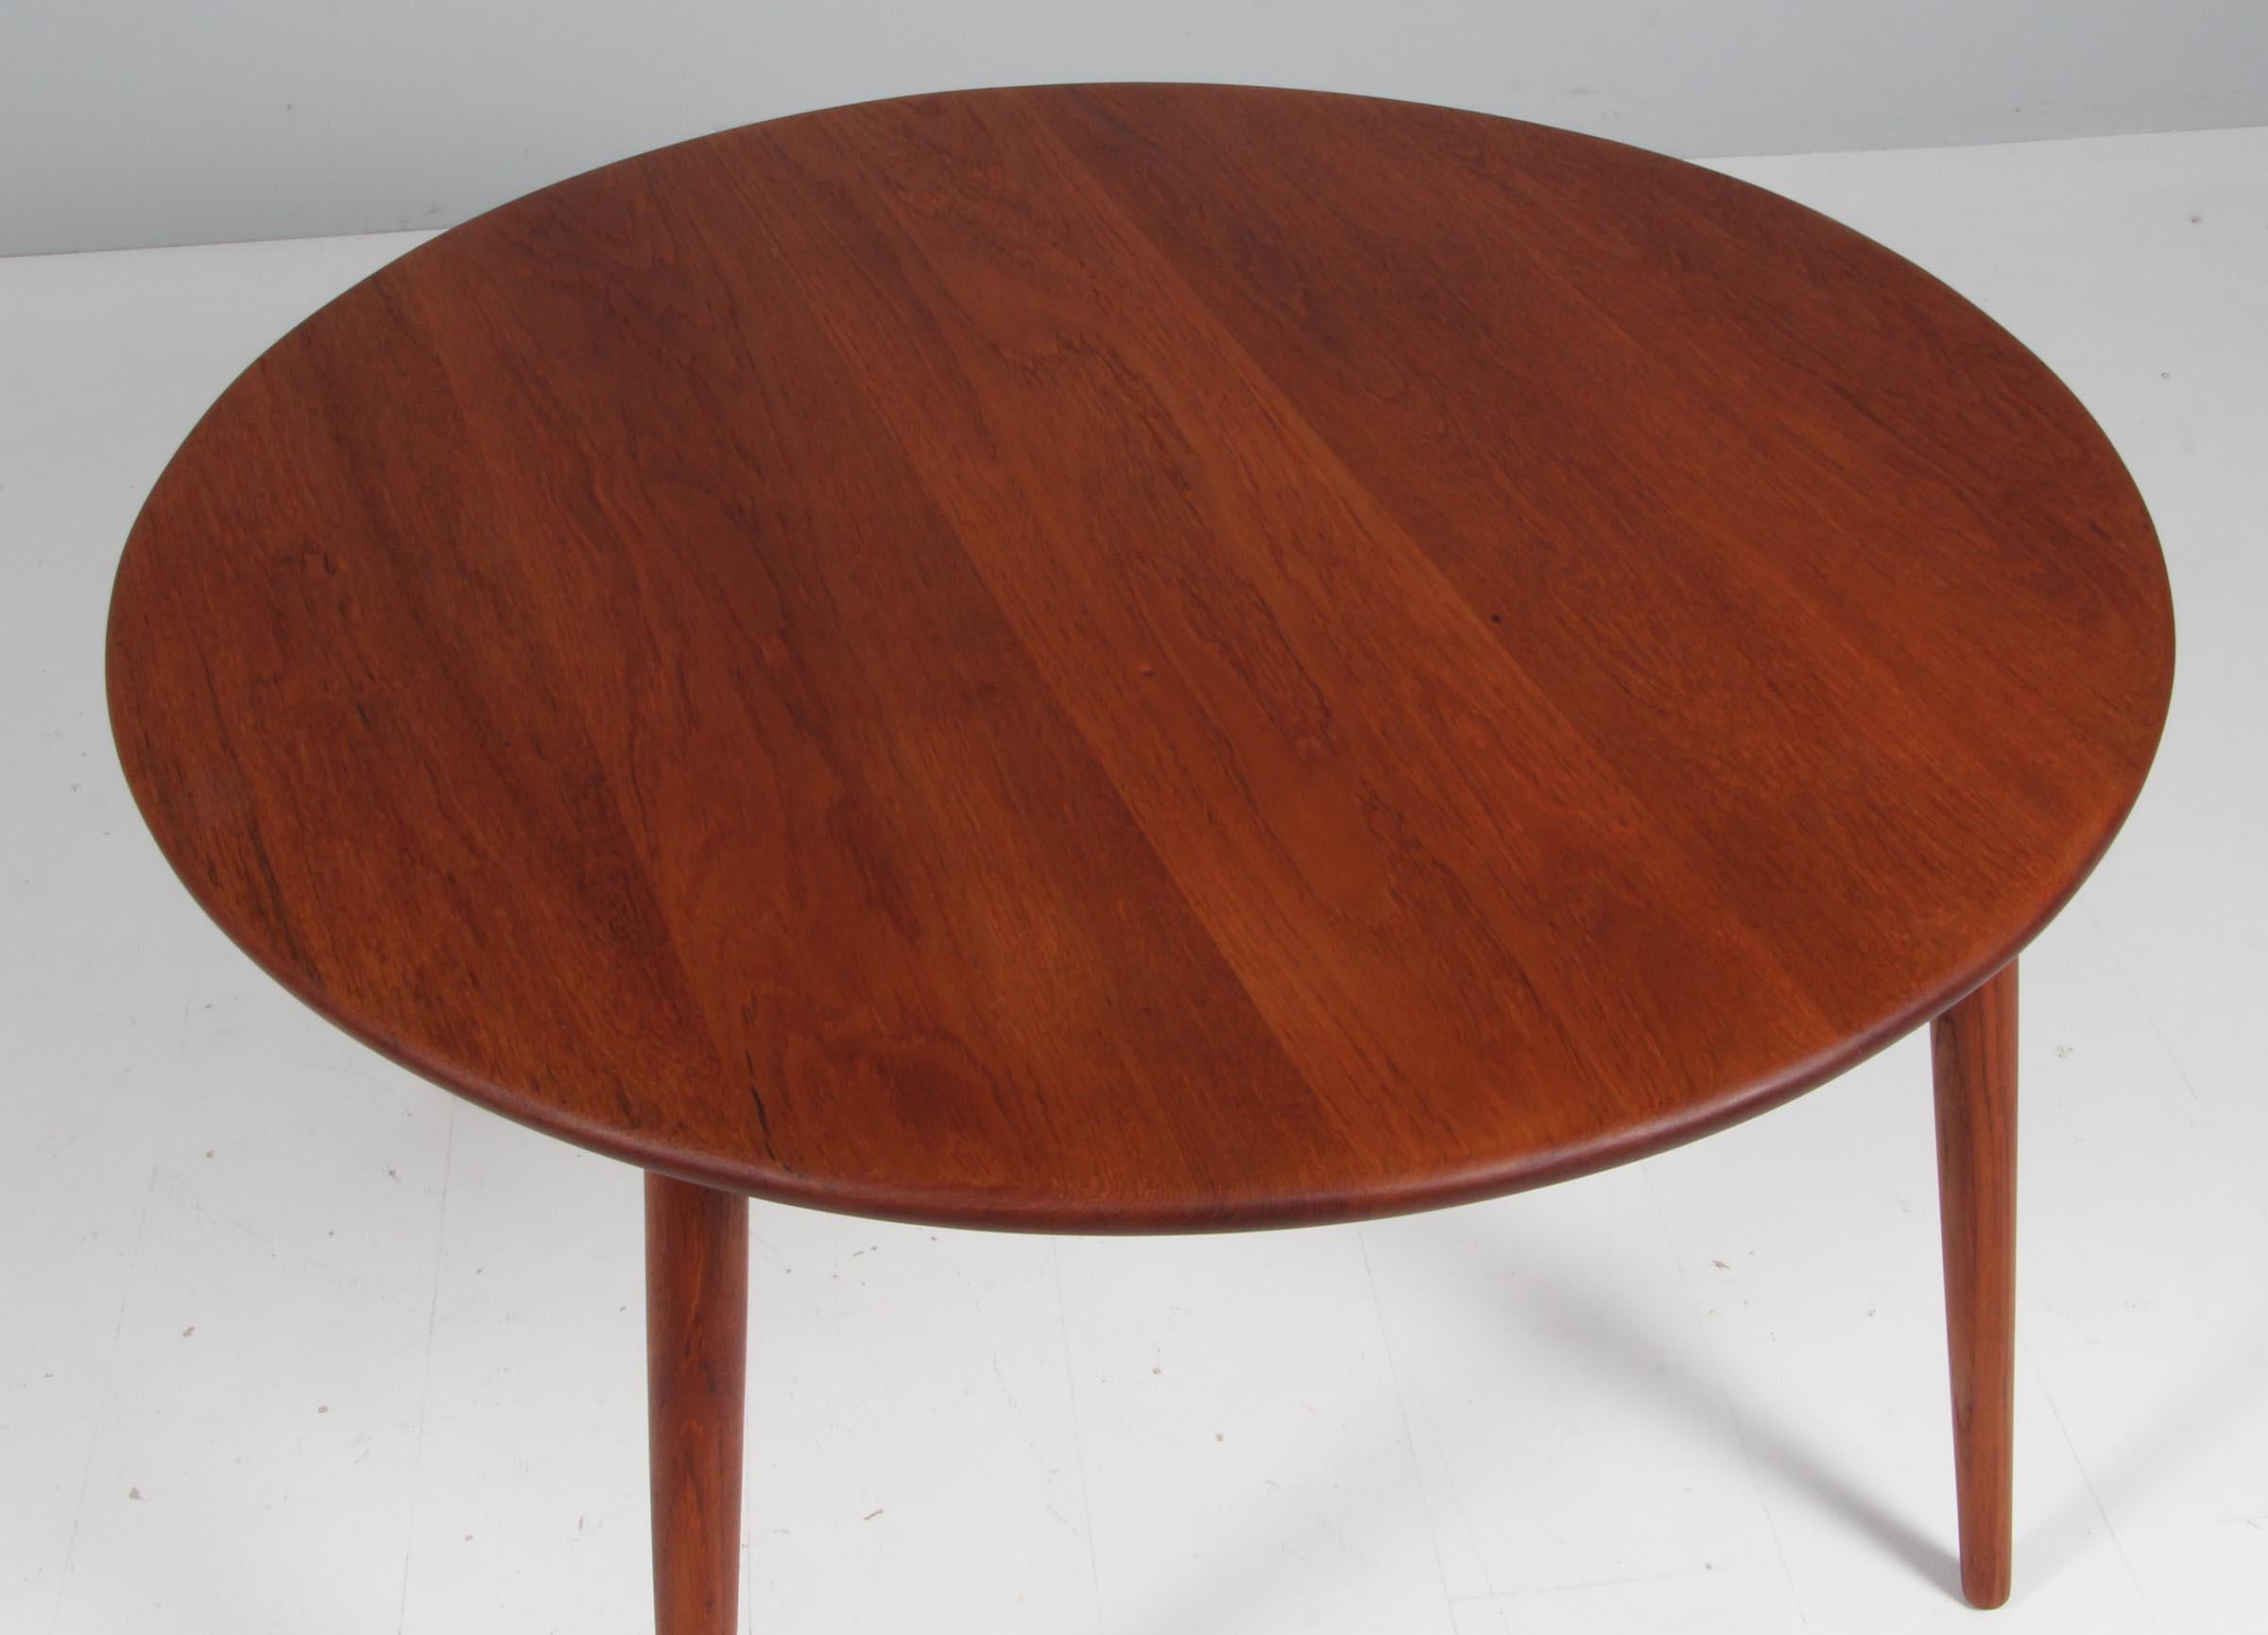 Ejner Larsen & Aksel Bender Madsen circular coffee table in solid teak.

Made by Cabinetmaker Willy Beck.